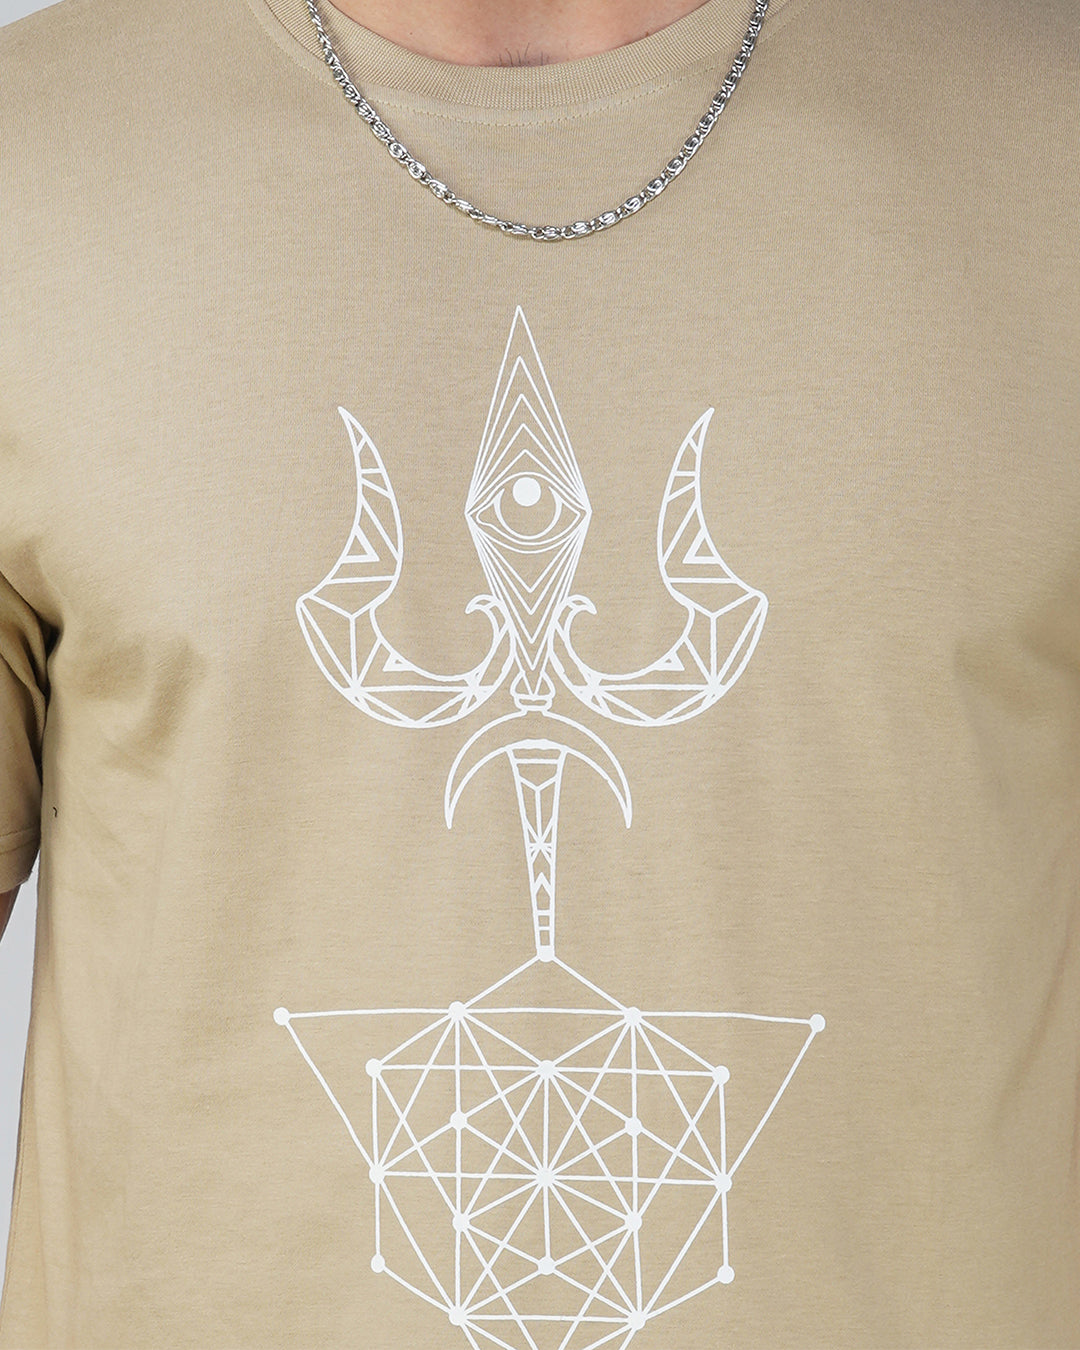 Sacred Trishul UV Light Reactive & Glow in the Dark Buff Color T-Shirt